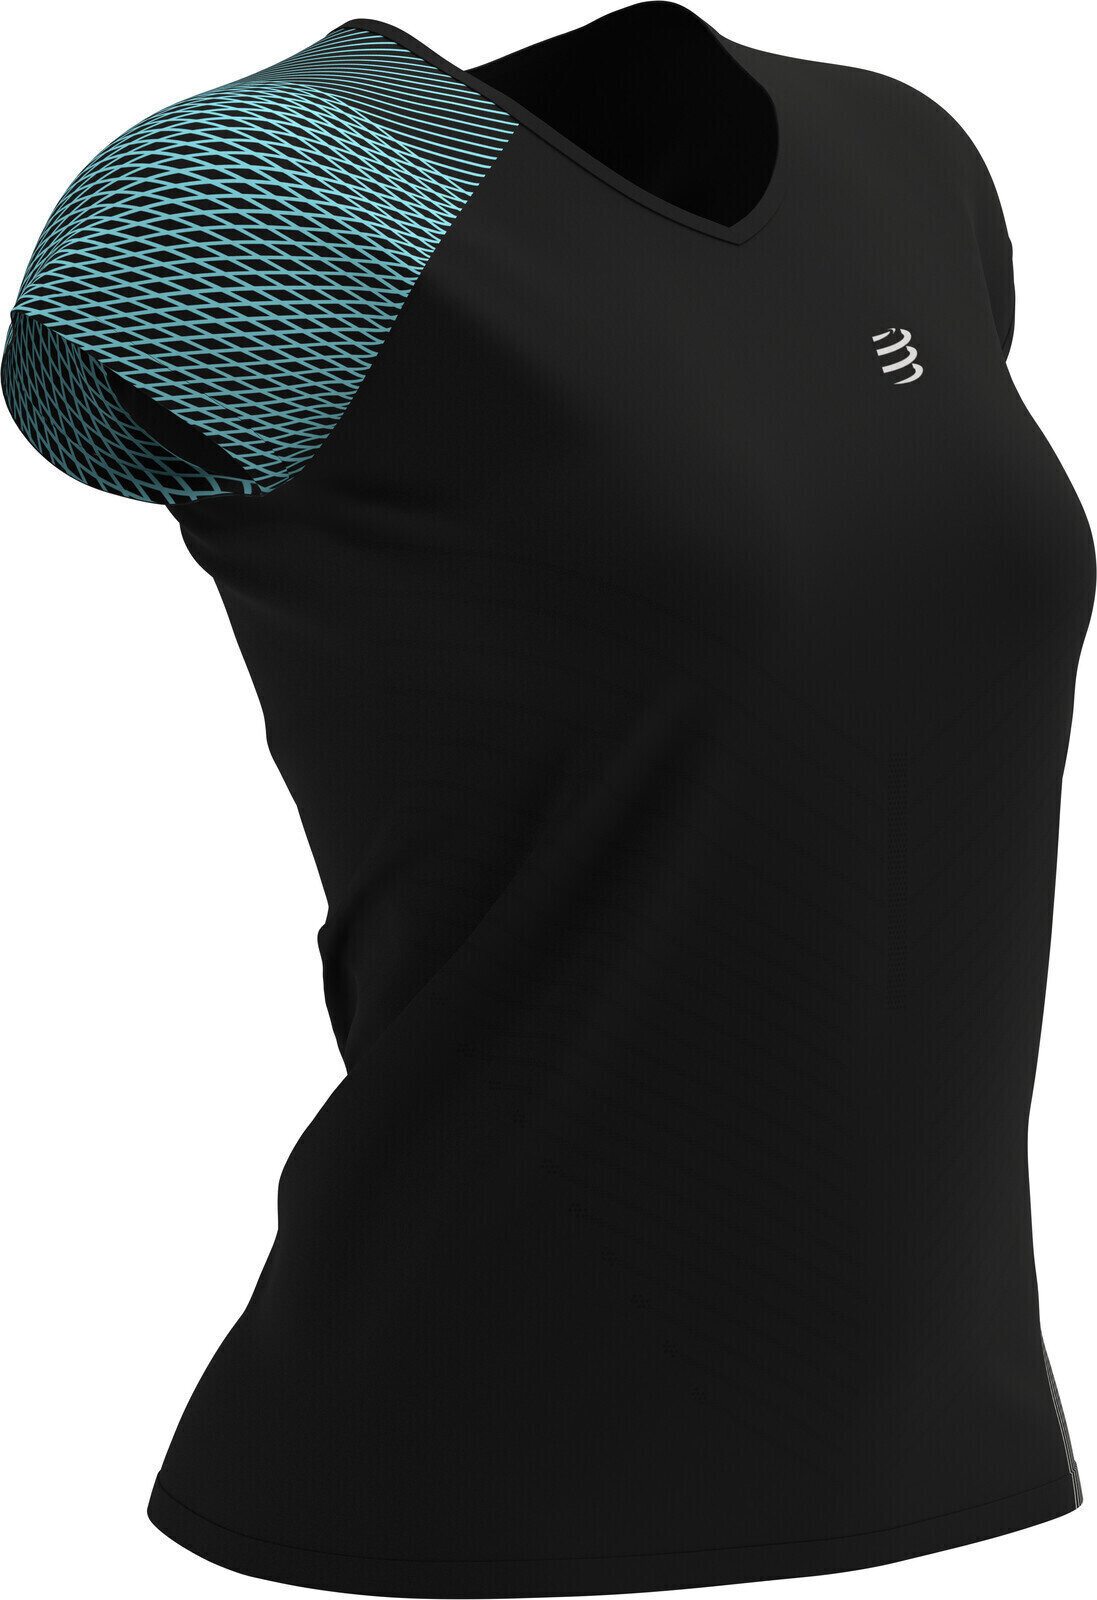 Running t-shirt with short sleeves
 Compressport Performance T-Shirt Black L Running t-shirt with short sleeves